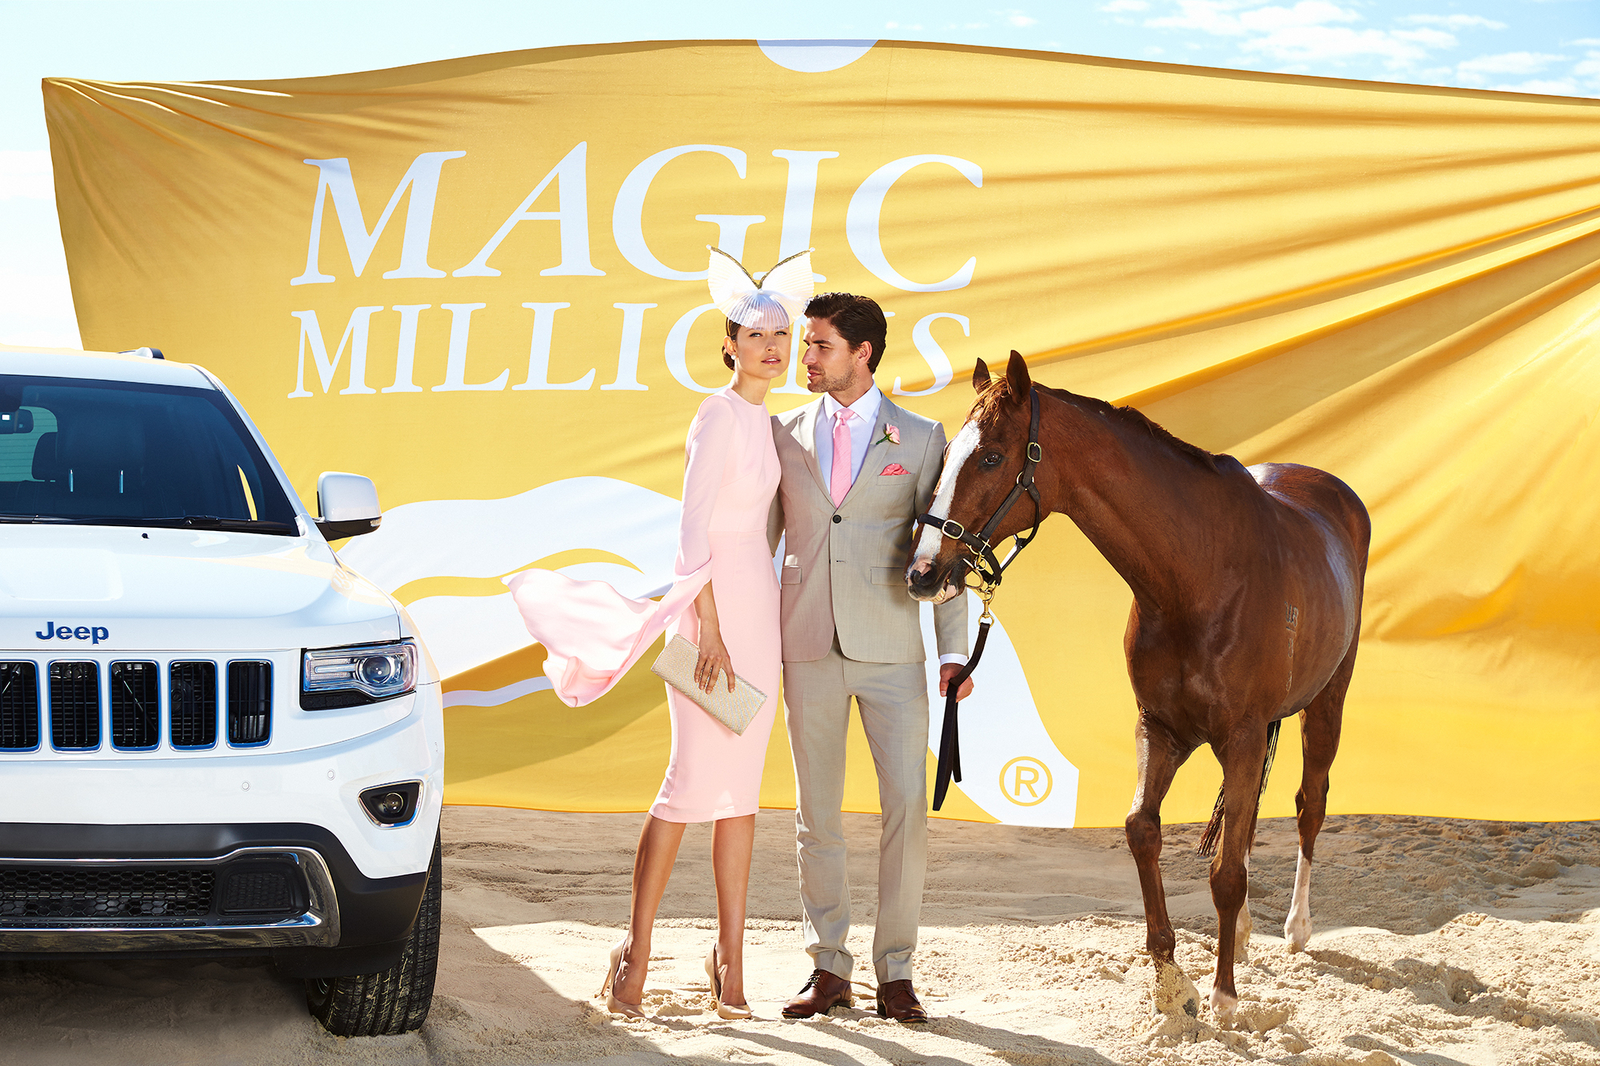 2016 Jeep Magic Millions Campaign